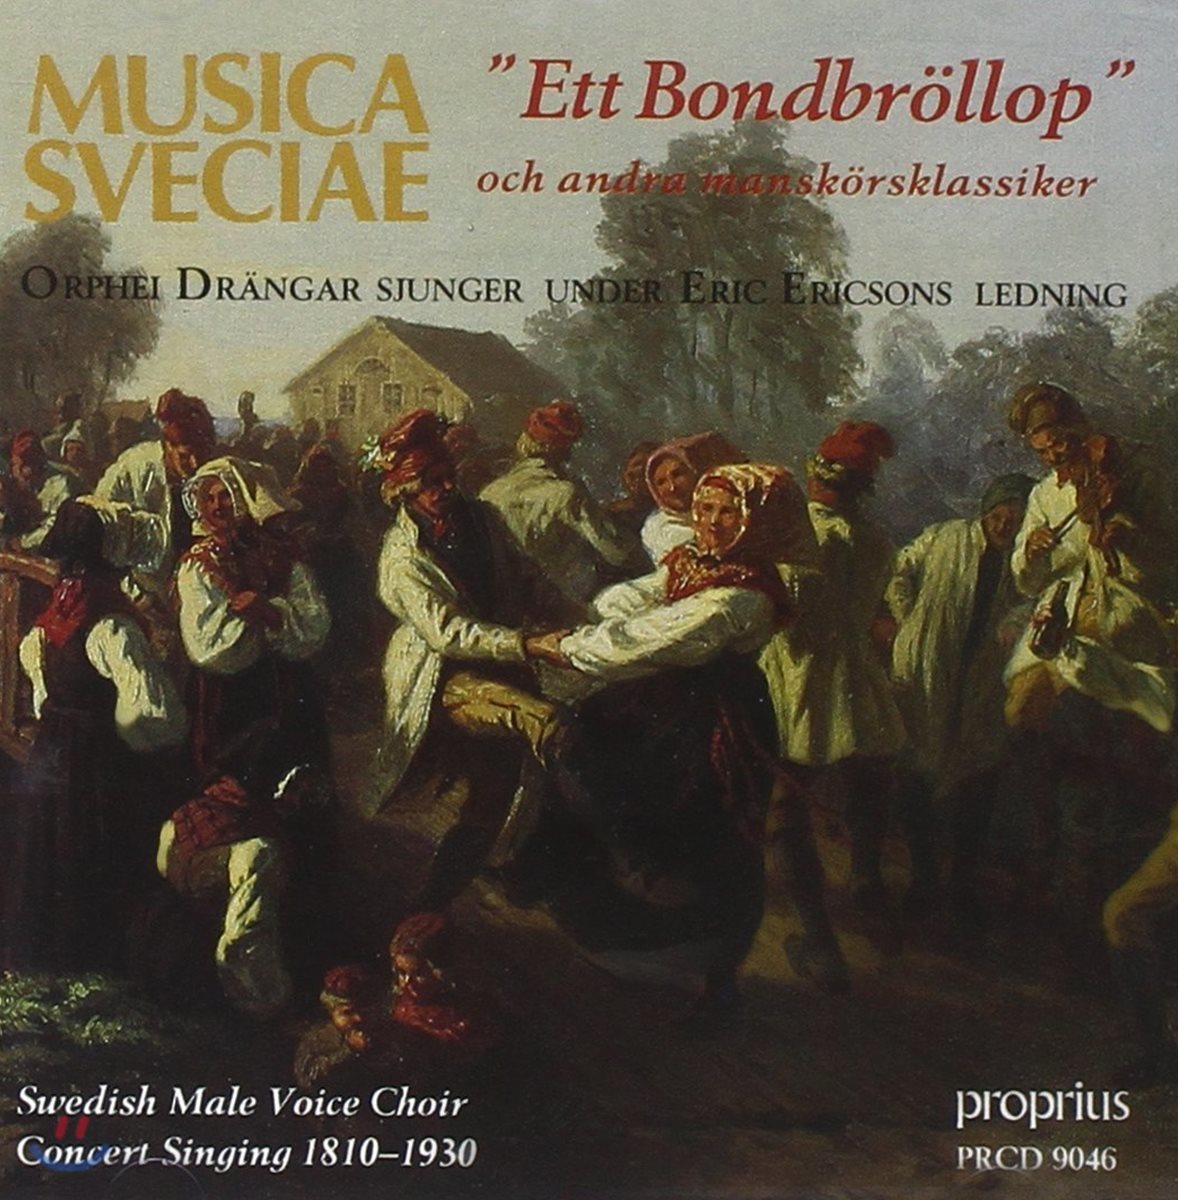 Orphei Drangar Choir 스웨덴 남성 합창곡집 (Musica Sveciae "Ett Bondbrollop" - Swedish Male Voice Choir)